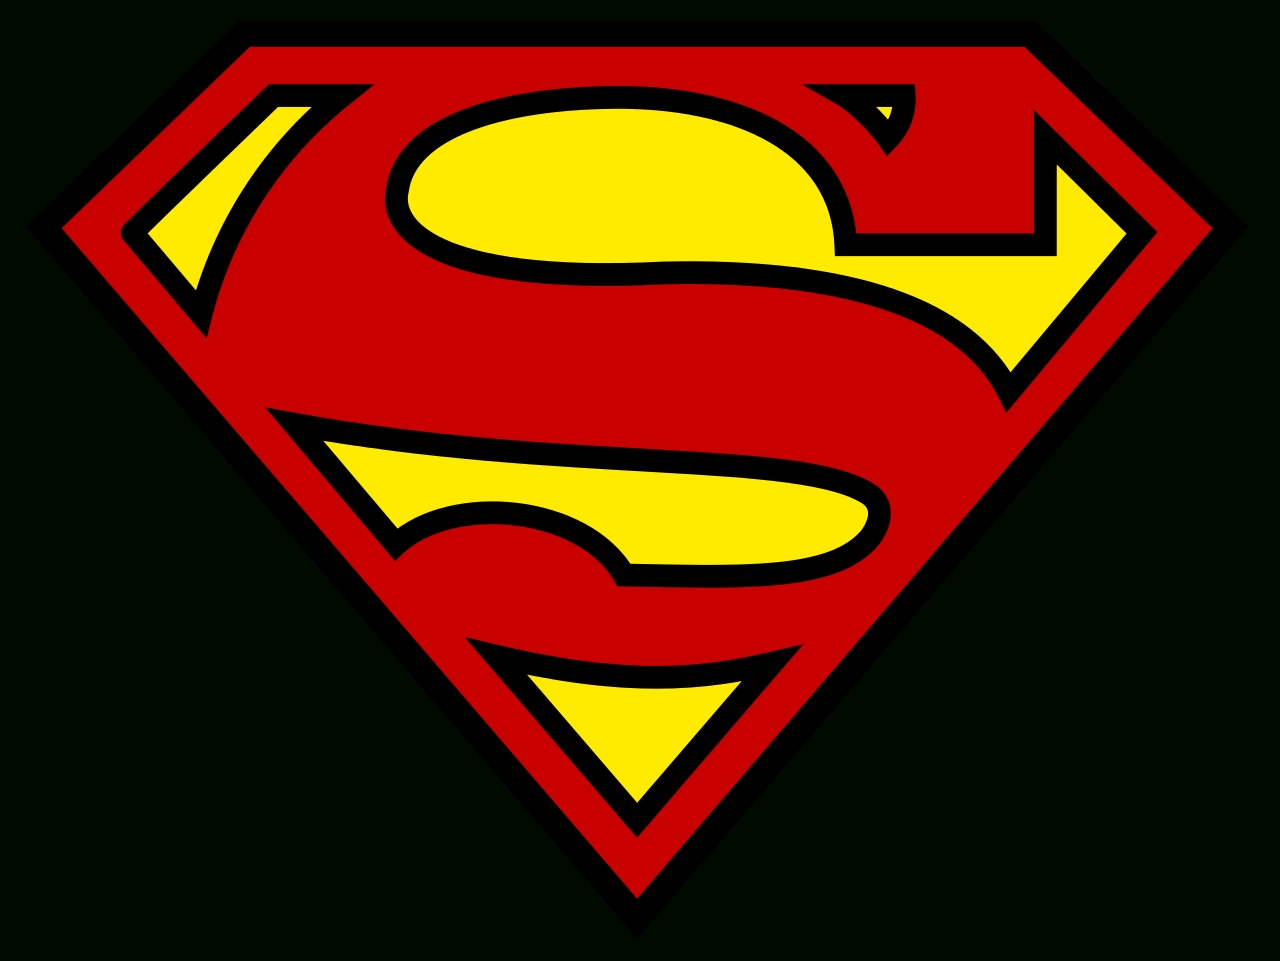 10 Best Pictures Of Superman Symbols FULL HD 1080p For PC Desktop